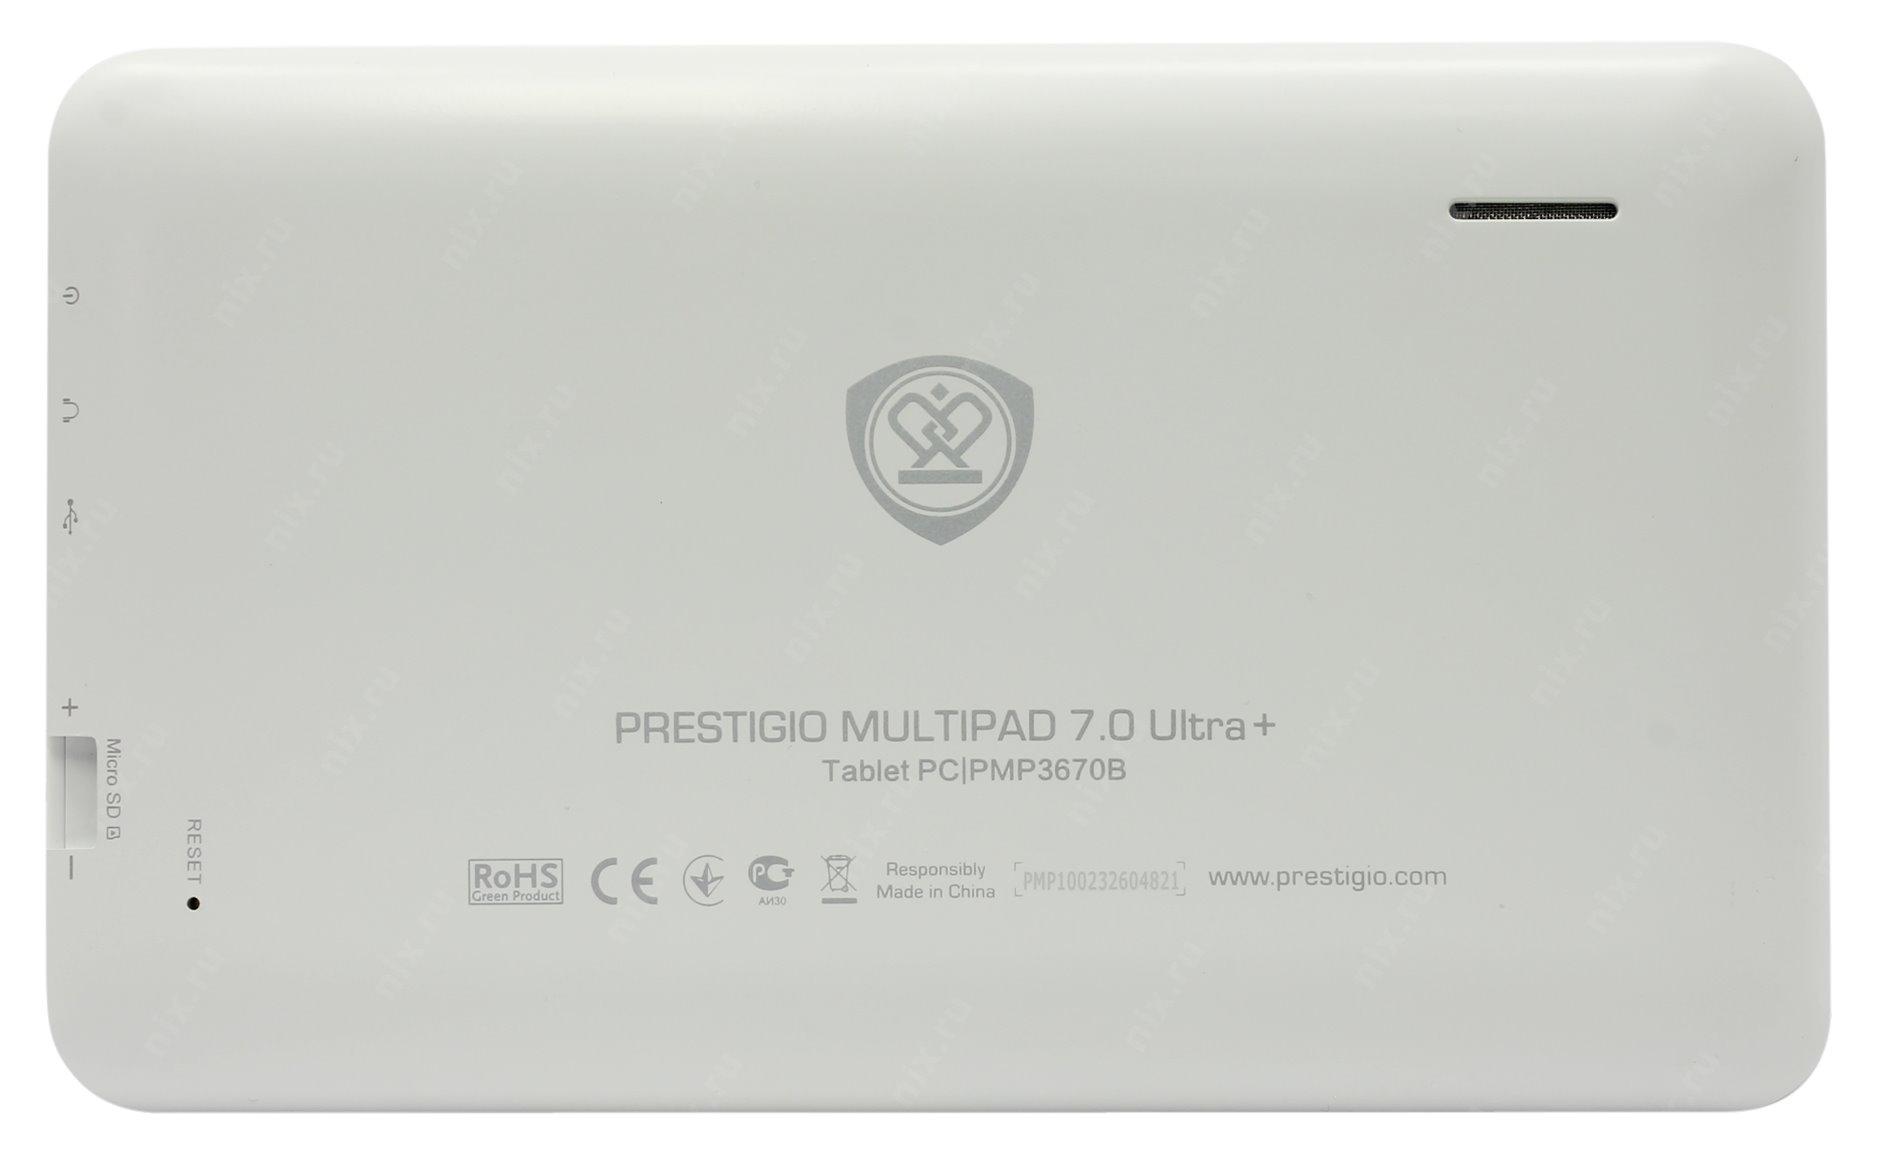 Multipad 7.0. Престижио мультипад 7.0 ультра. Prestigio MULTIPAD 7.0 Ultra+плата. Планшет Prestigio MULTIPAD 7.0 Ultra+ материнская плата. Схема планшета Prestigio MULTIPAD 7.0 Ultra.